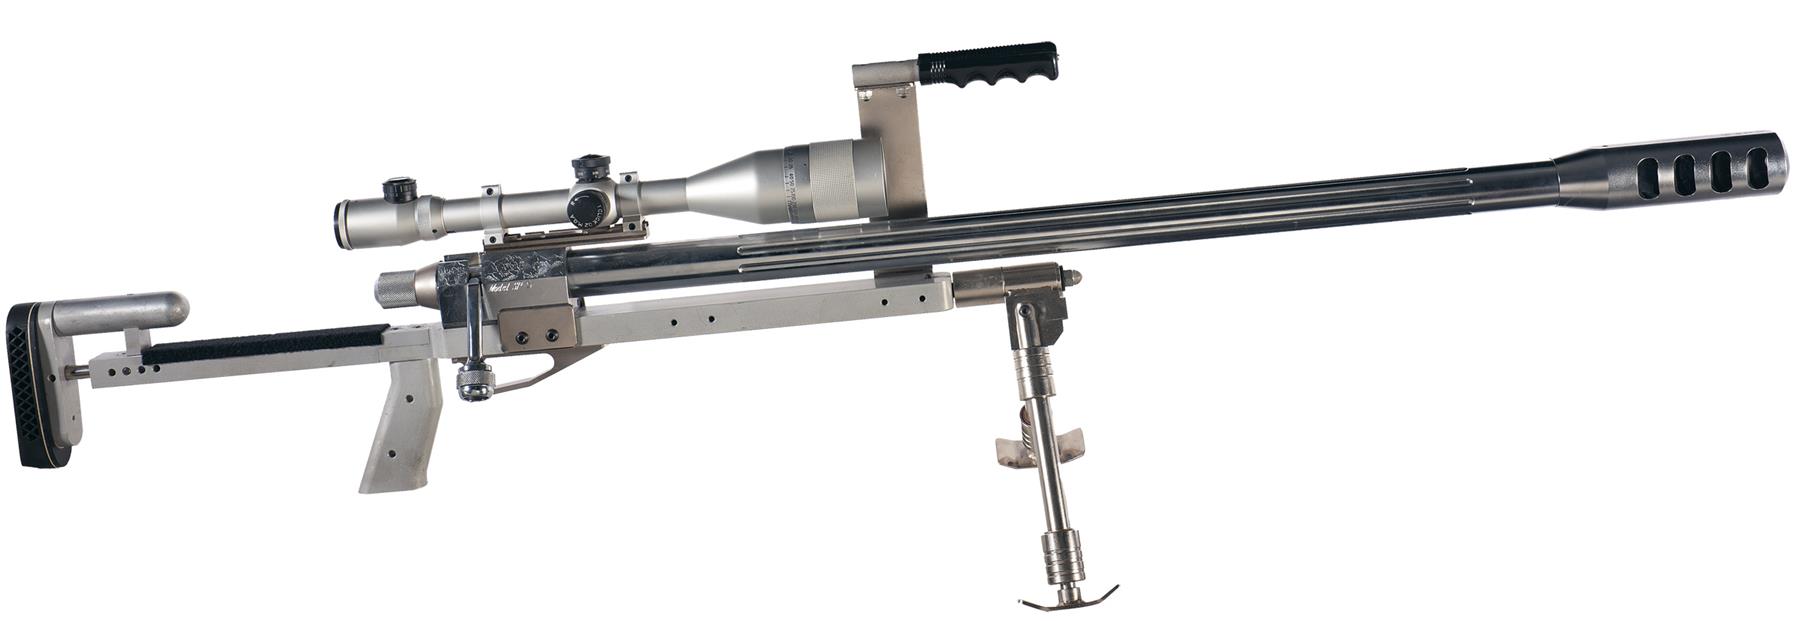 State Arms Gun Company Single Shot Rifle 50 BMG.